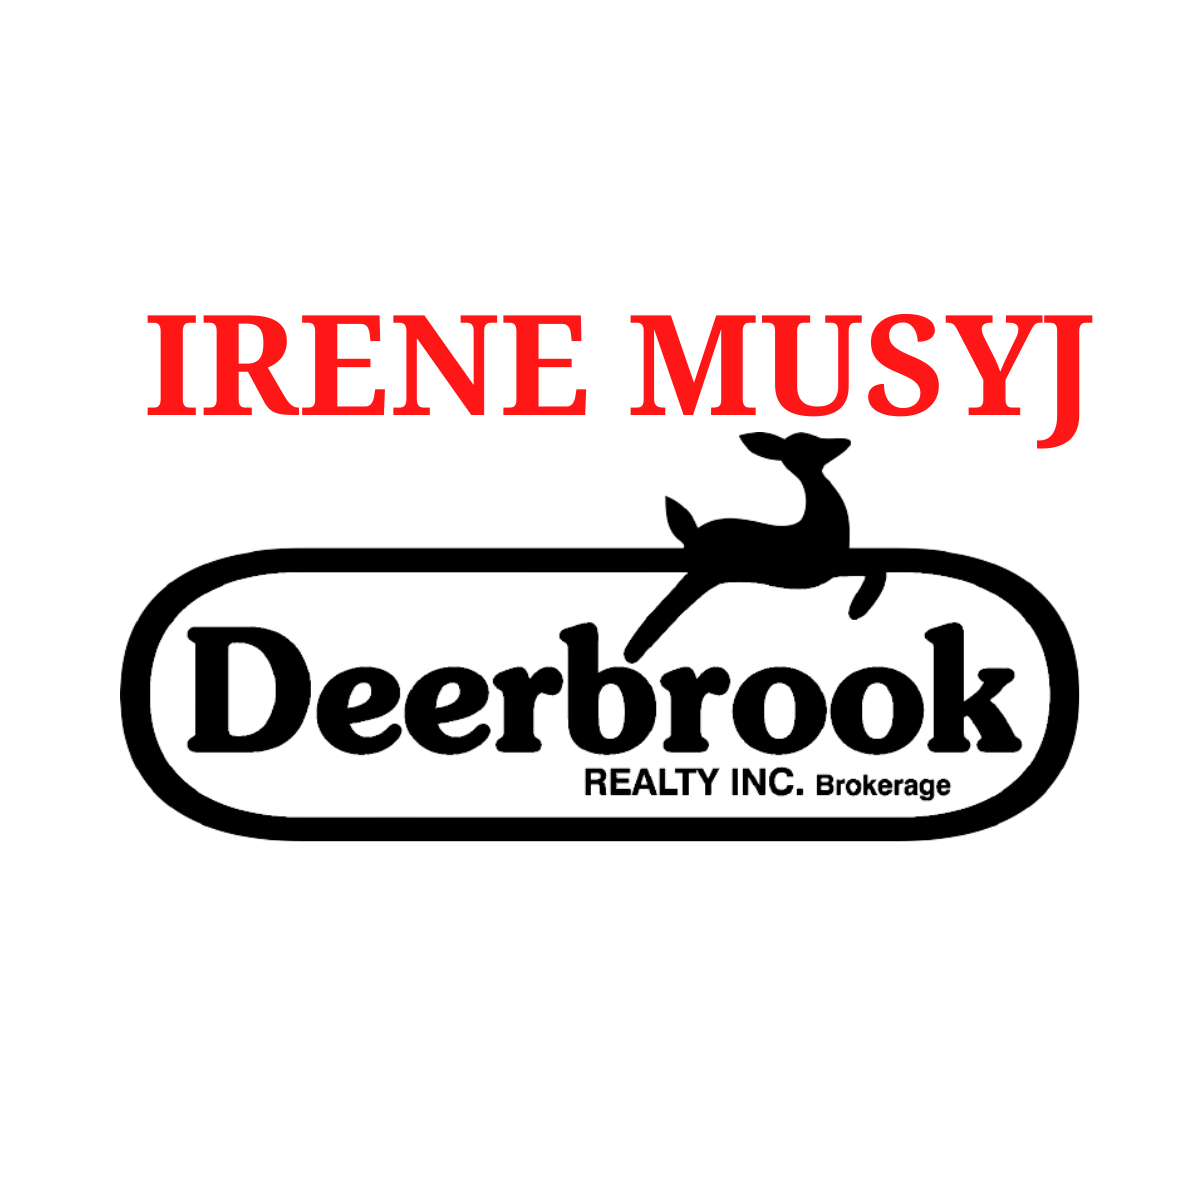 Irene Musyj - Deerbrook Realty Inc.